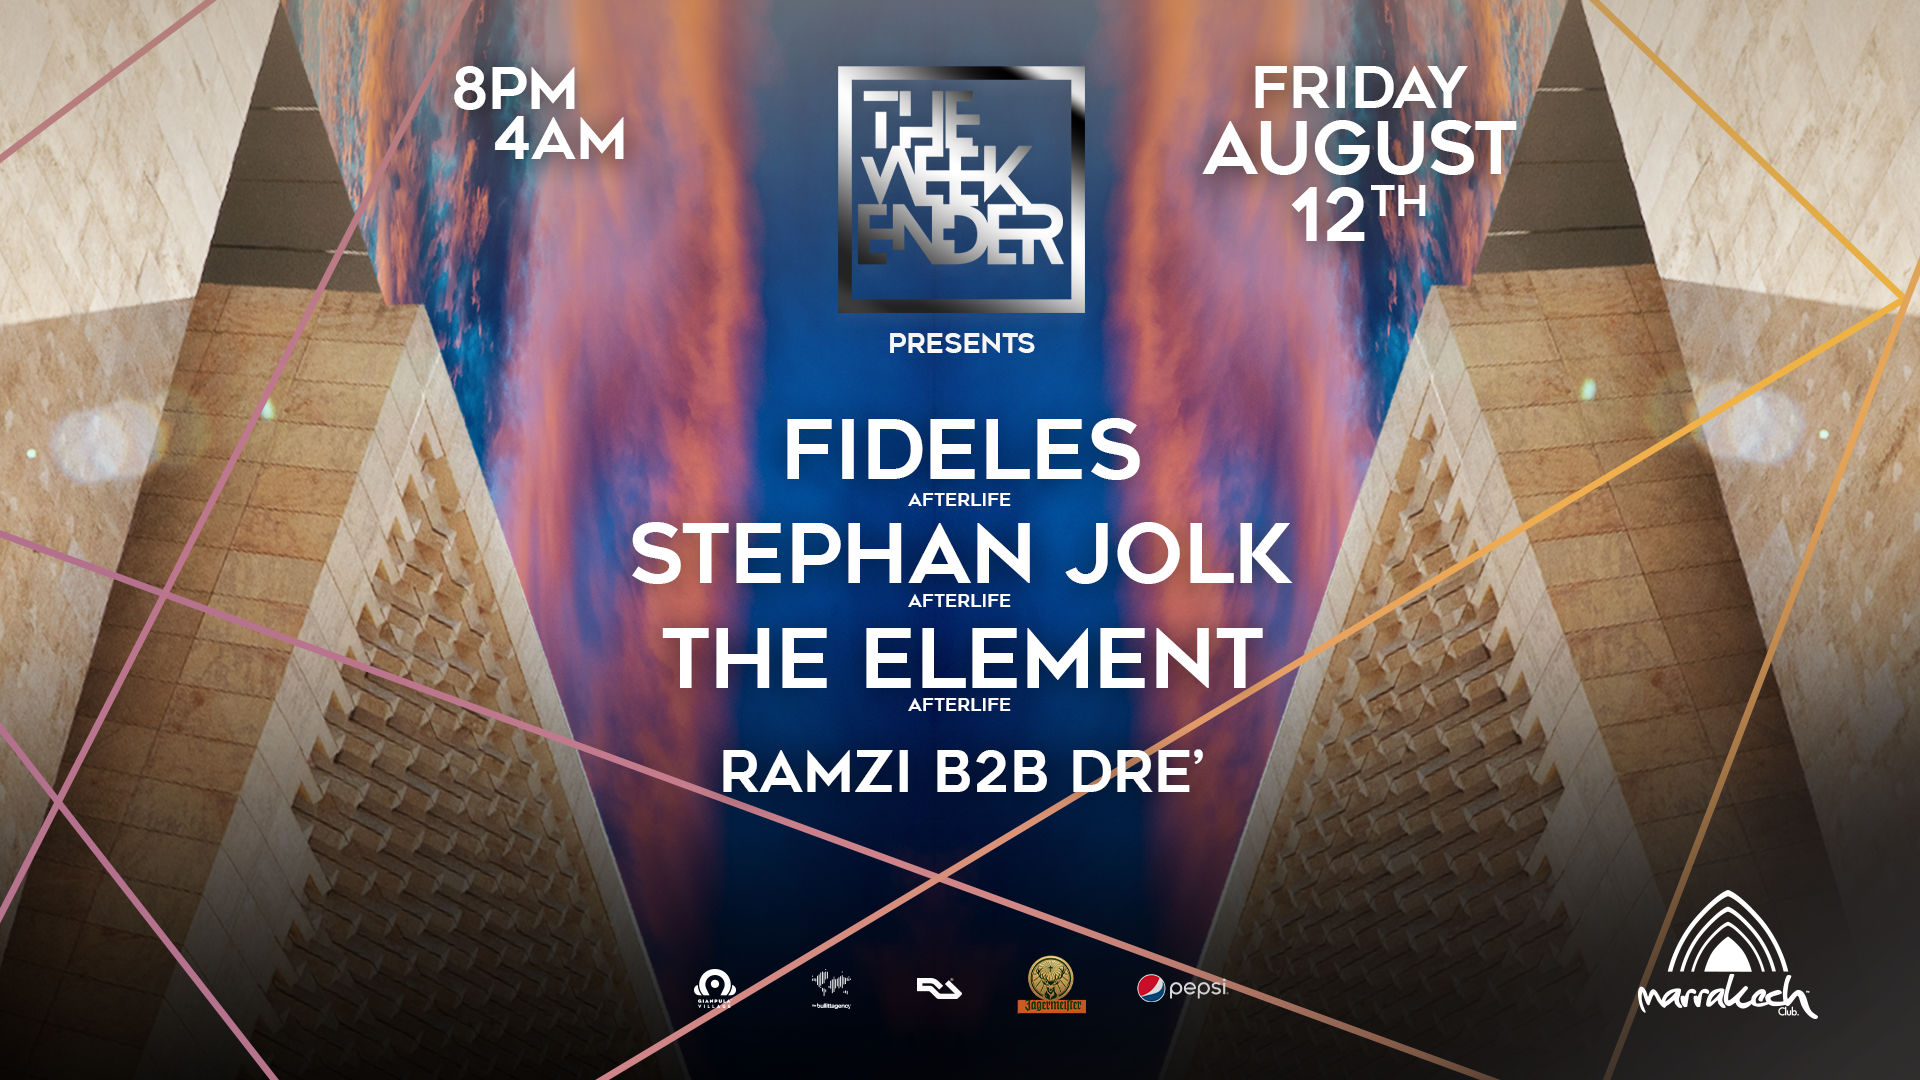 The Weekender present Fideles - Stephan Jolk - The Element  - フライヤー裏